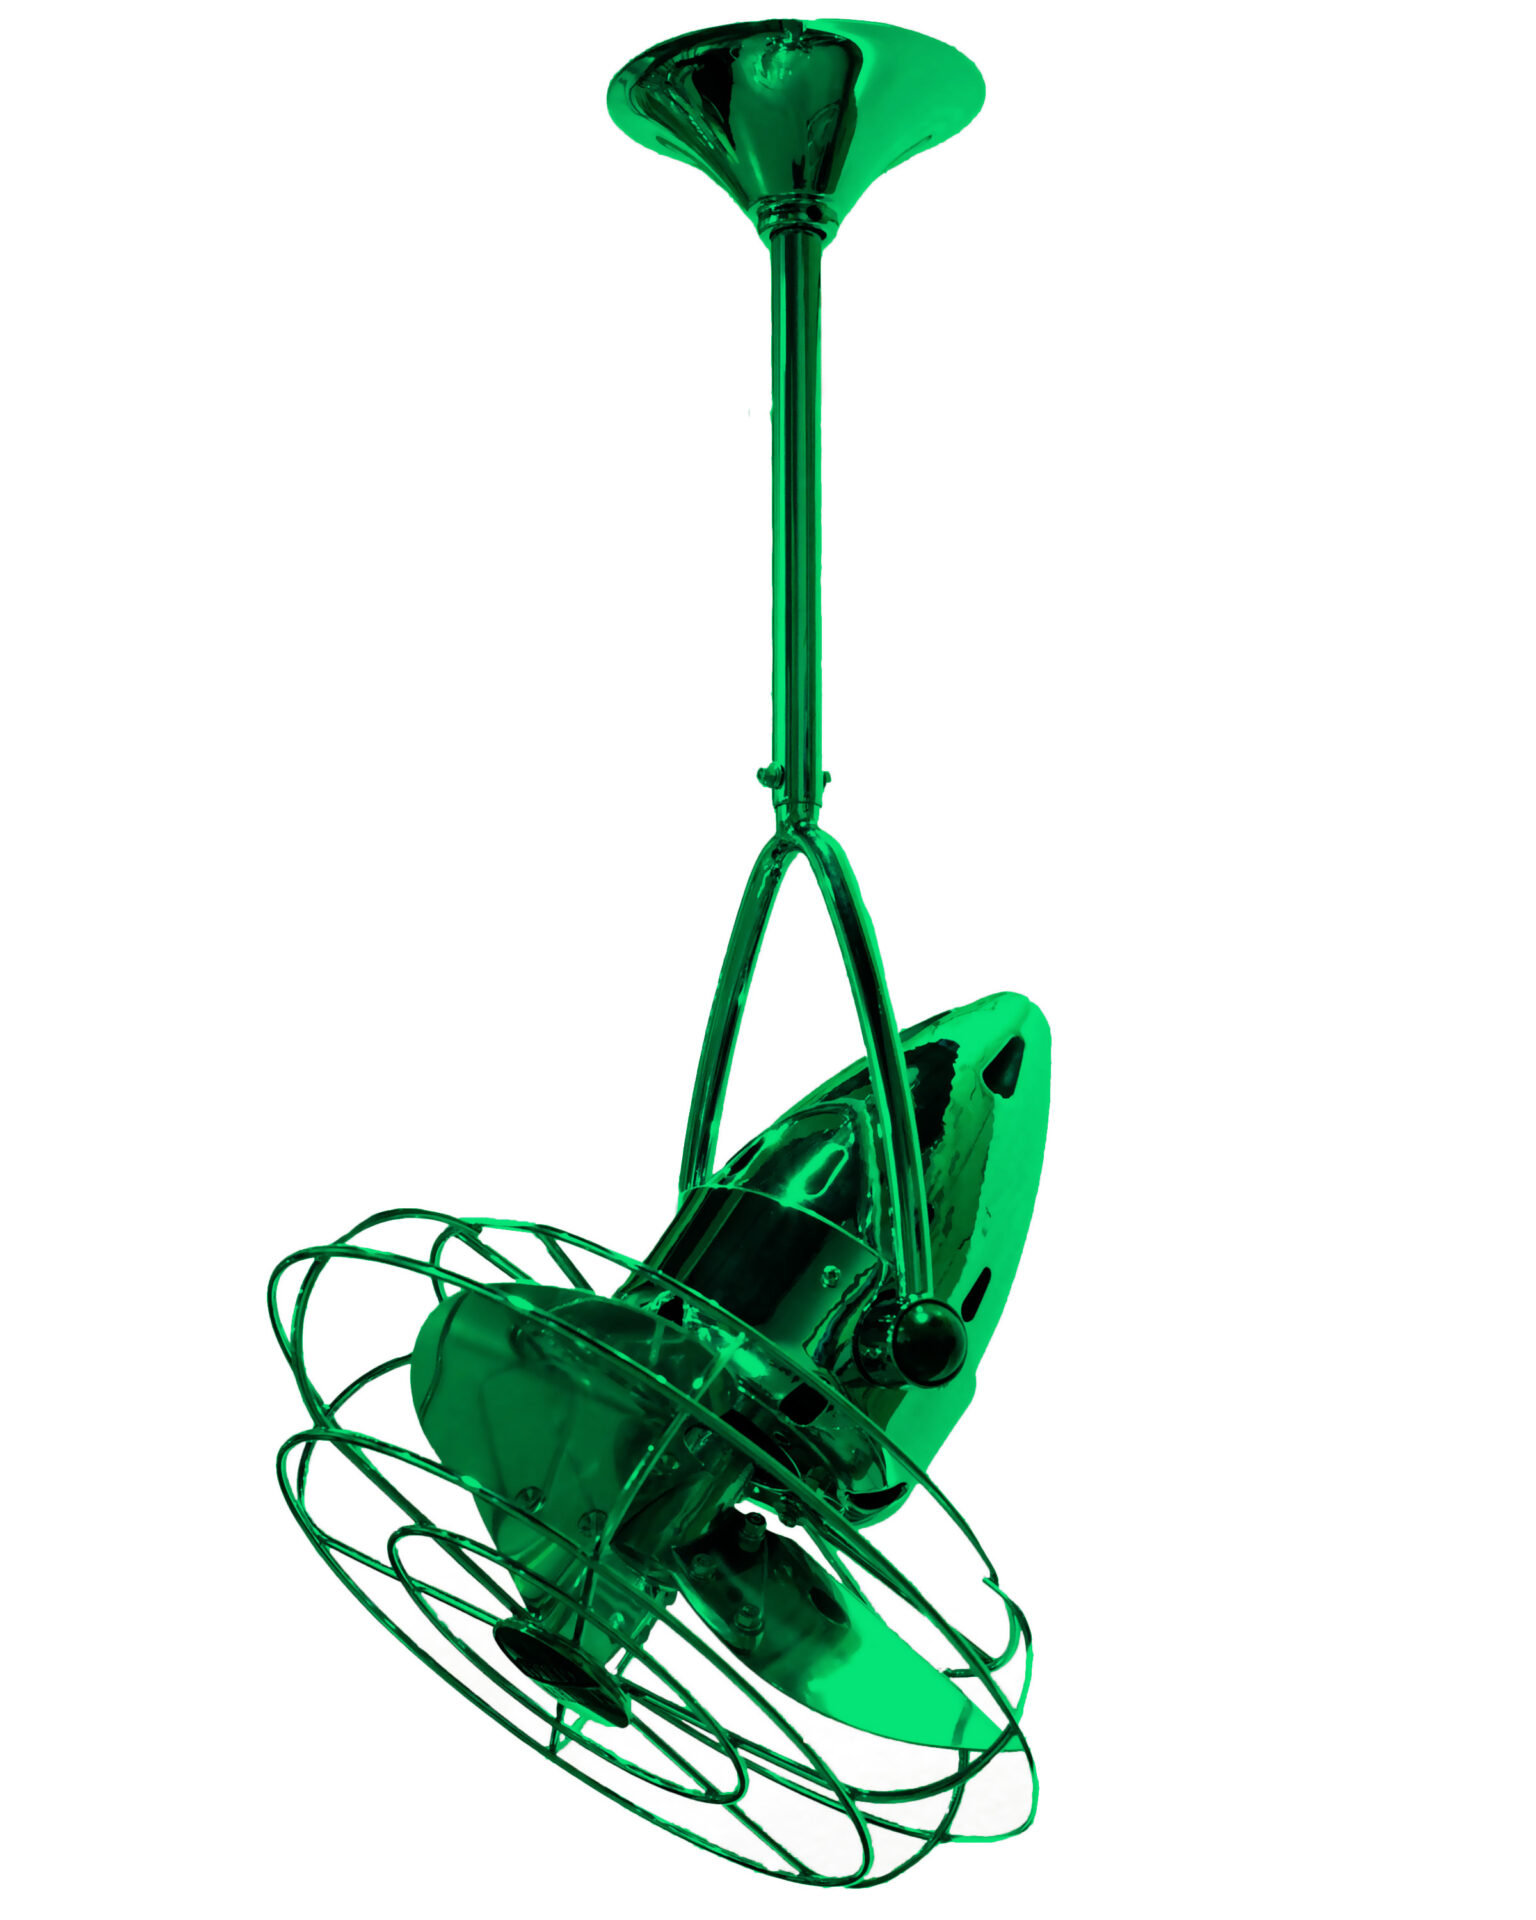 Jarold Direcional Ceiling Fan in Esmeralda / Green Finish with Metal Blades with Decorative Guard